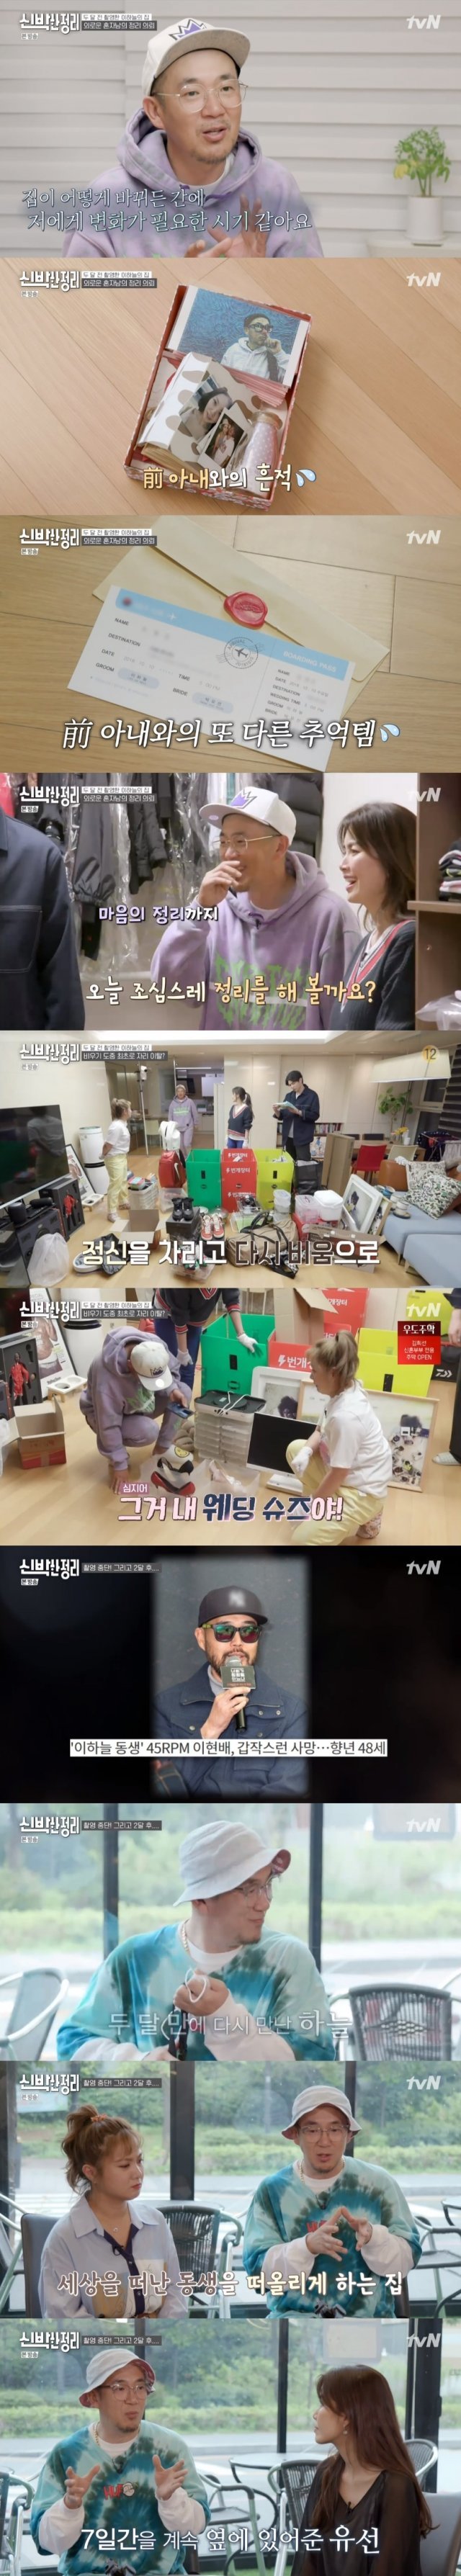 tvN ‘신박한 정리’ 캡처 © 뉴스1